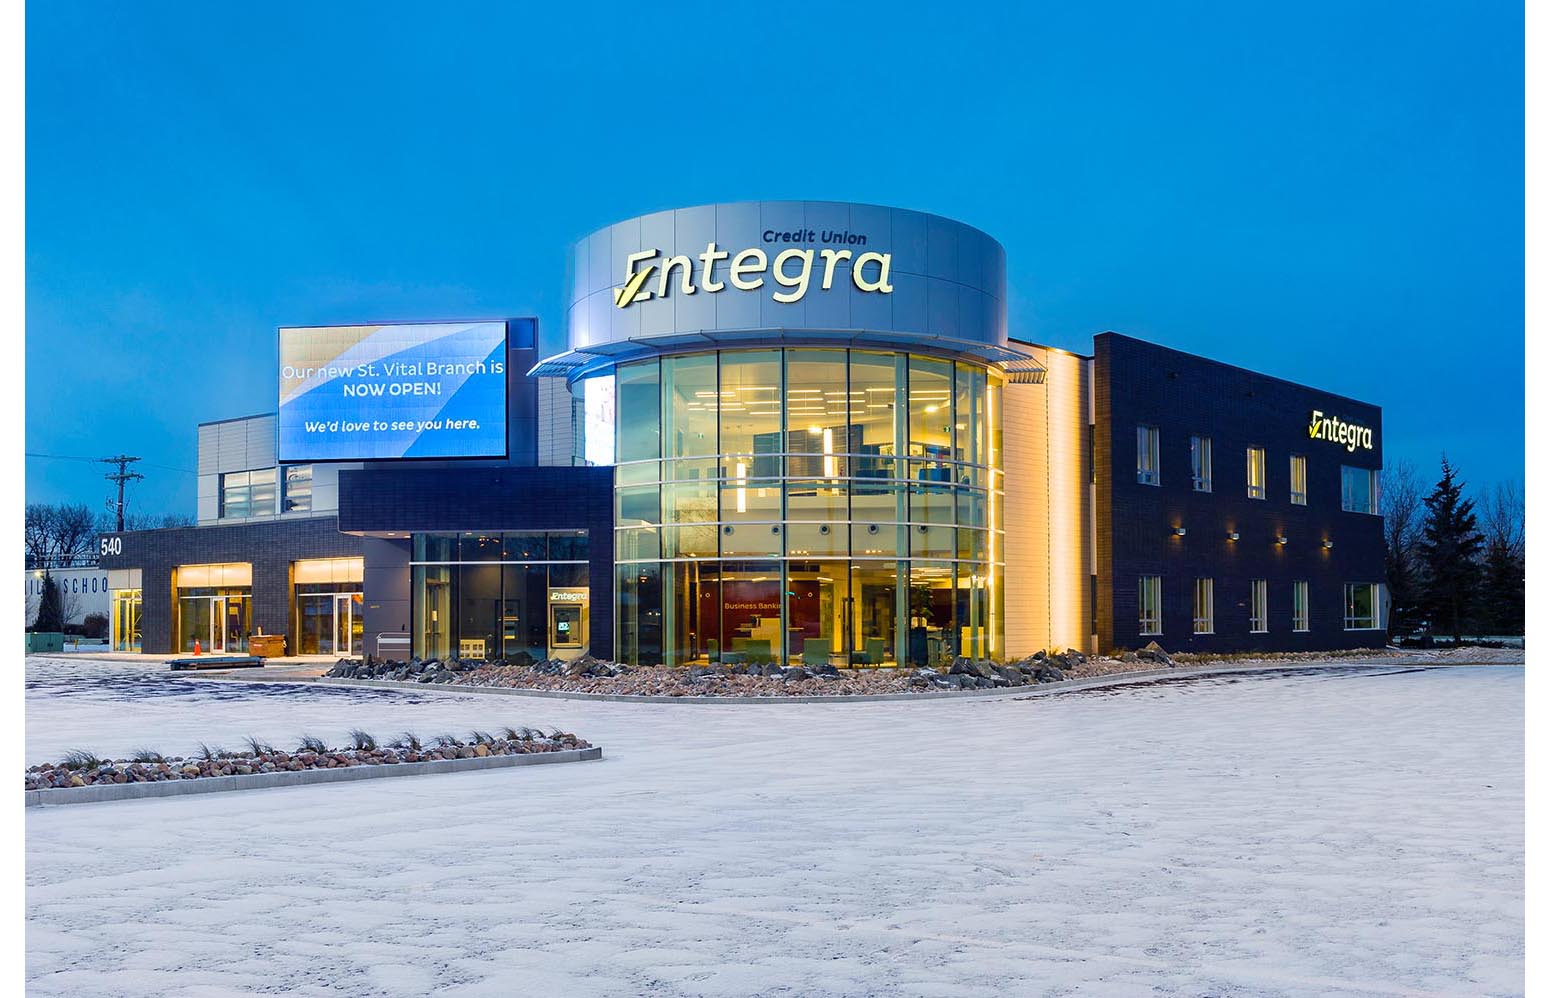  Entegra Credit Union, exterior photo of building at dusk / Photo: Joel Ross 